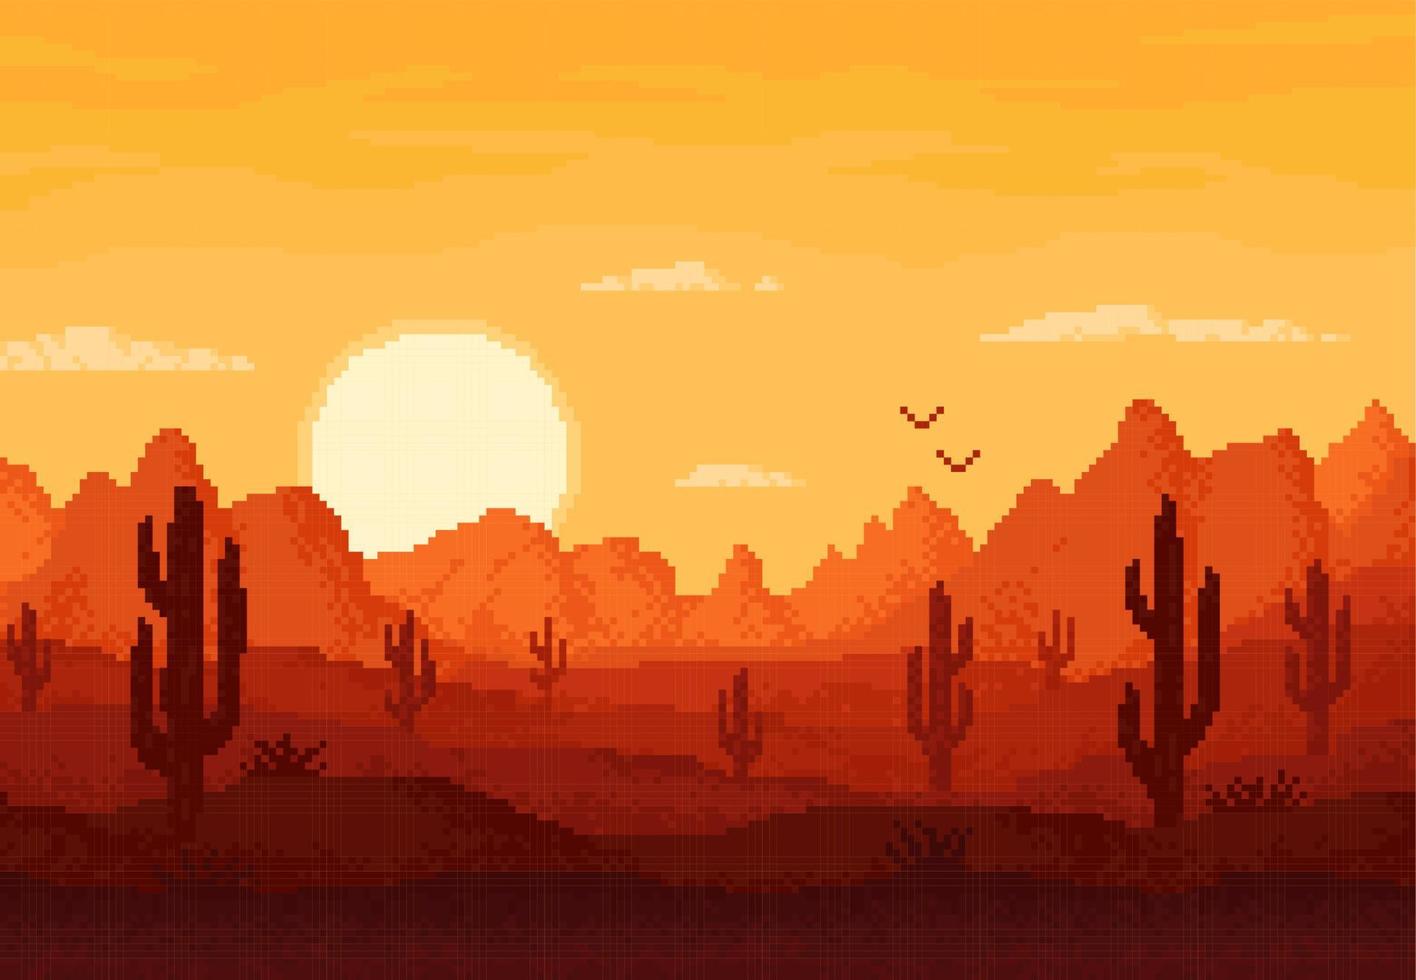 8bit pixel desert landscape, arcade game level vector